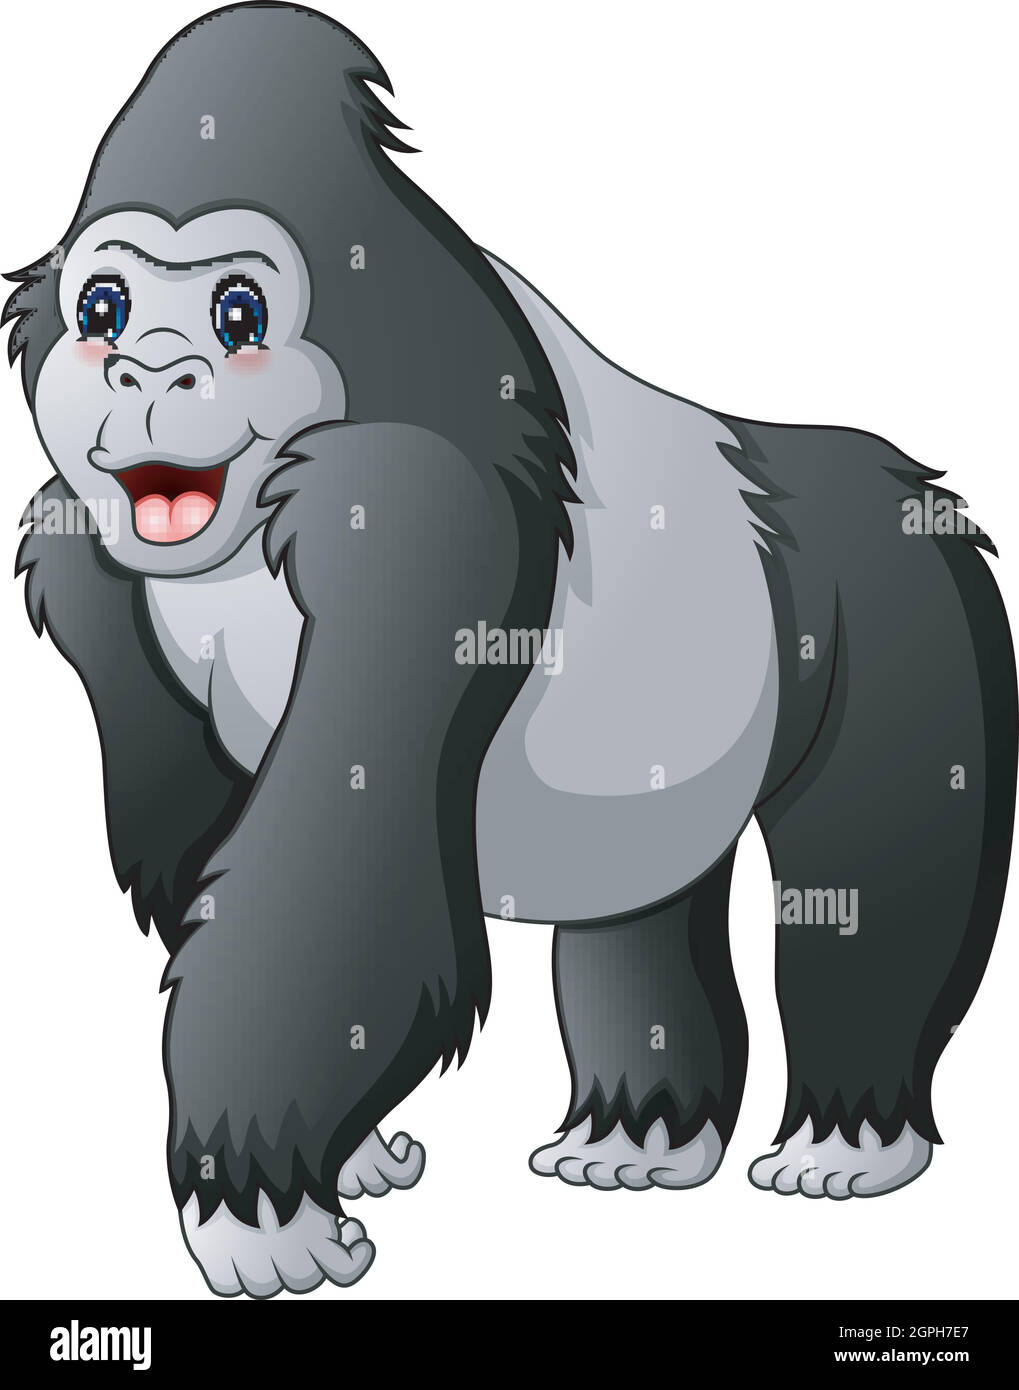 cute gorilla illustration